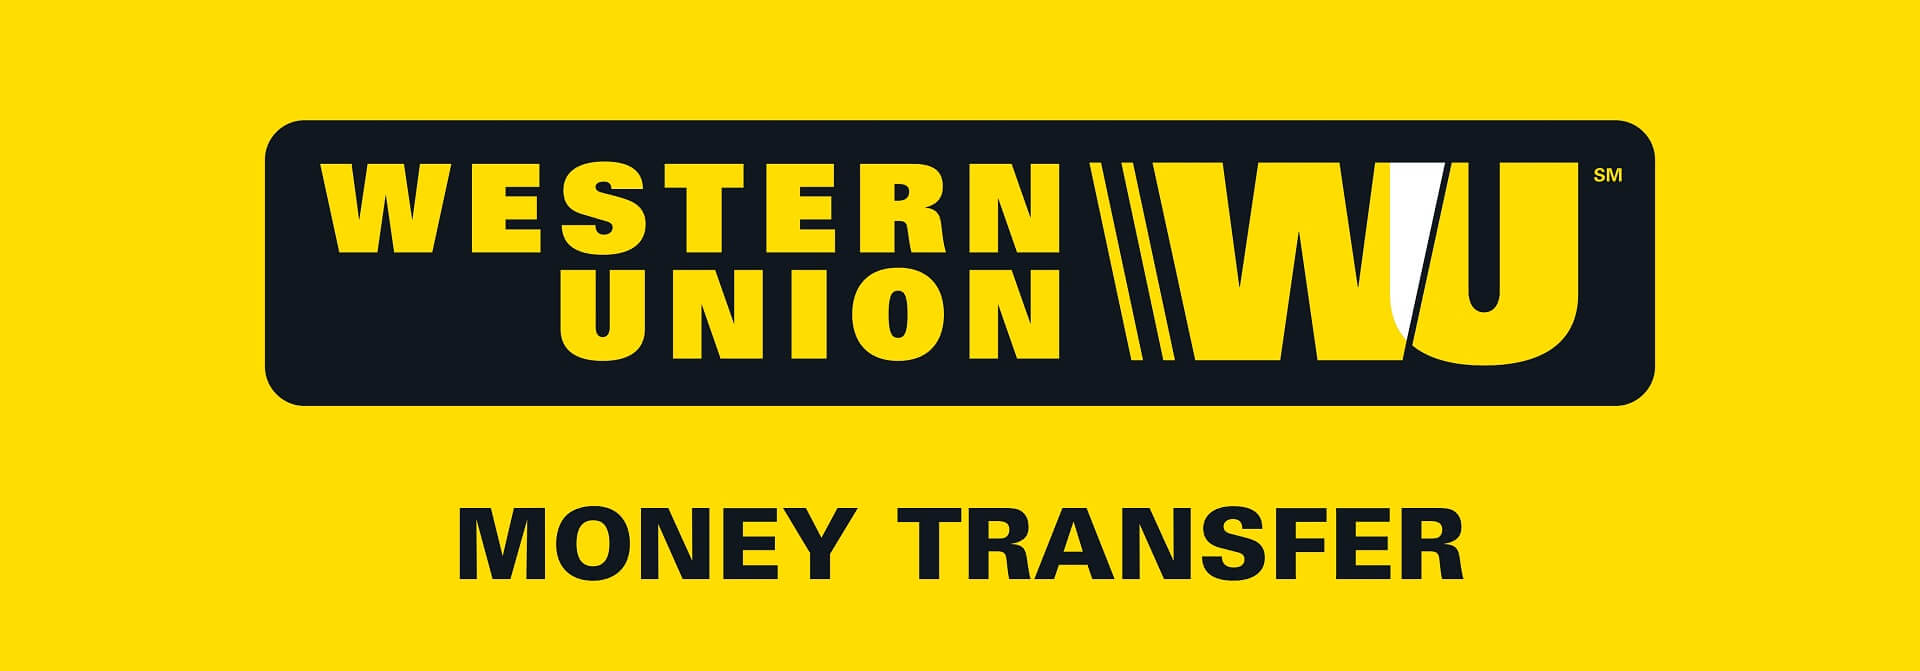 Western union correos